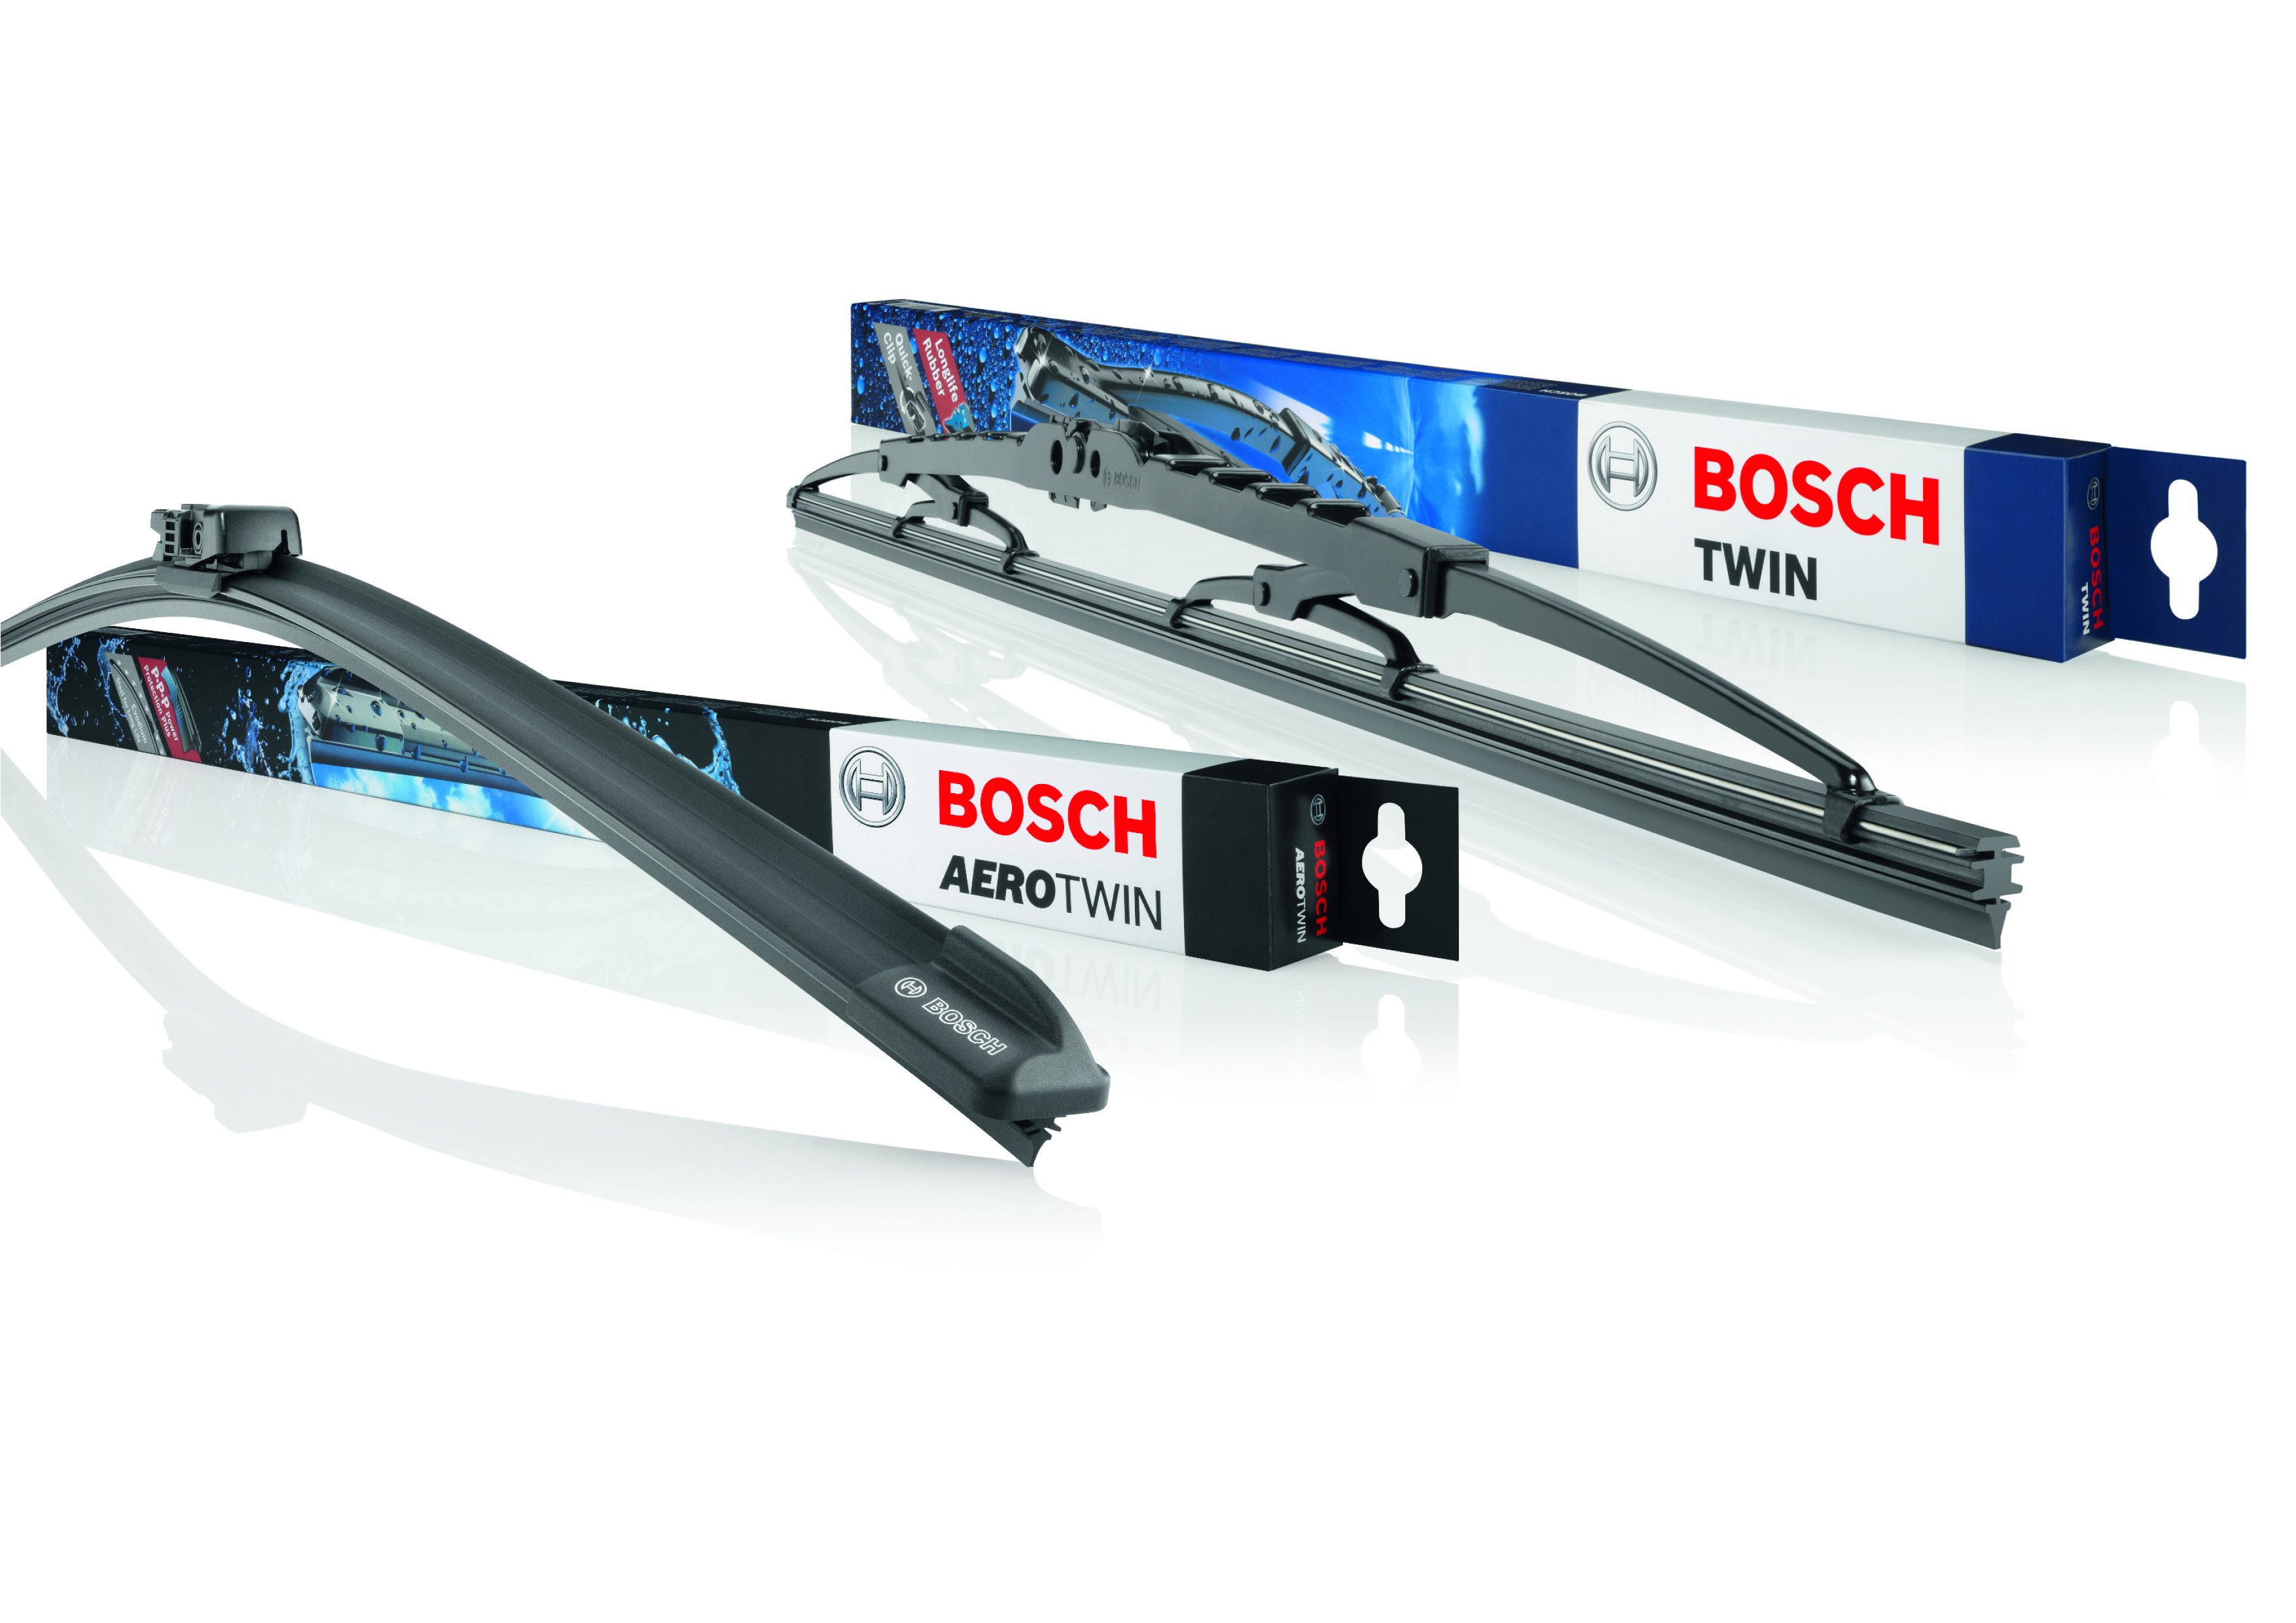 Bosch Essuie-glace Twin 600U Acheter chez JUMBO